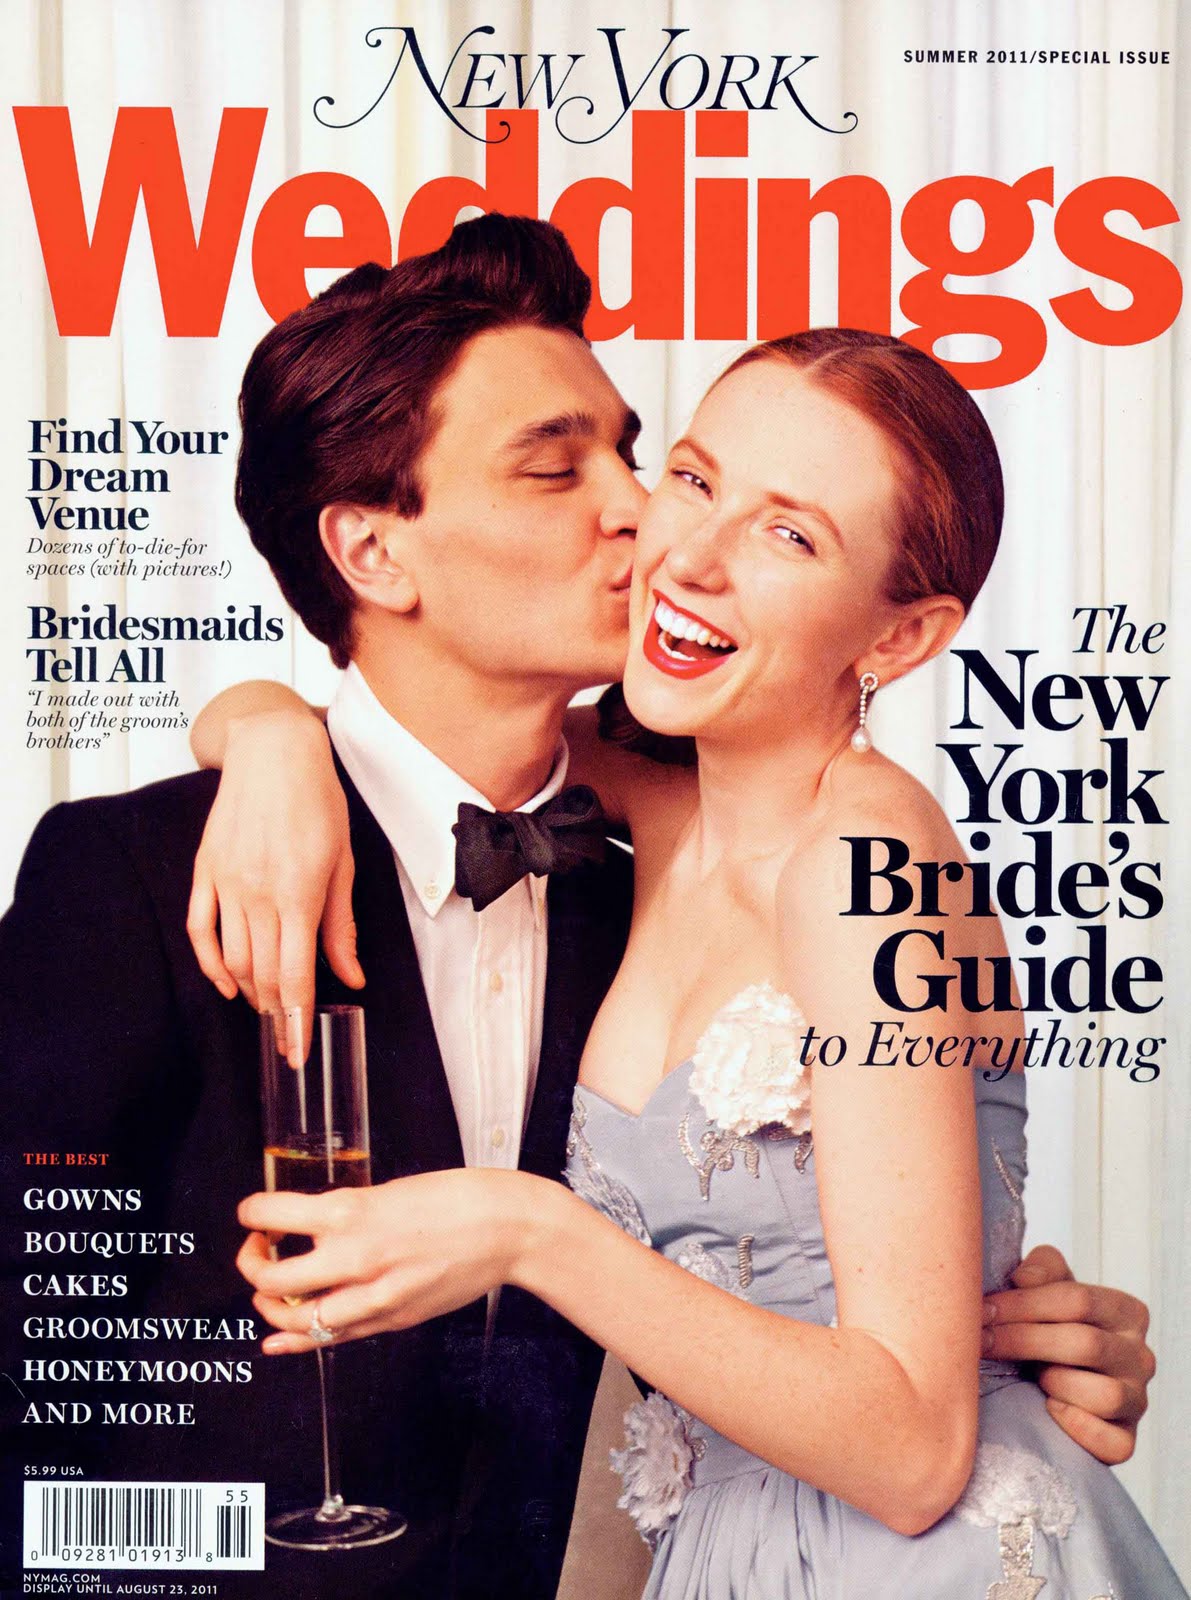 NY-MAG-WEDDINGS-C_web.jpg